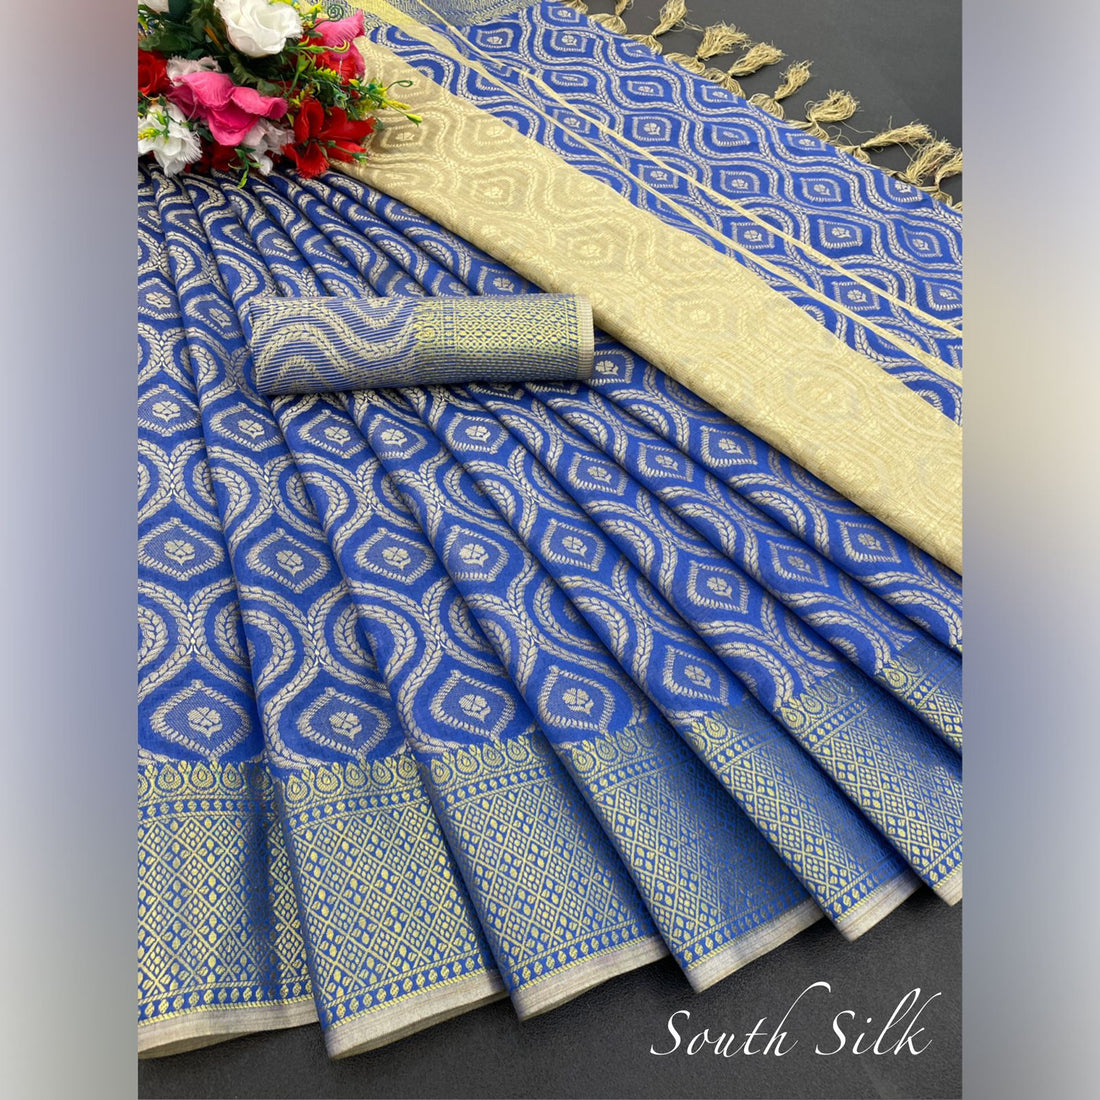 Pooja Blue South Silk Saree